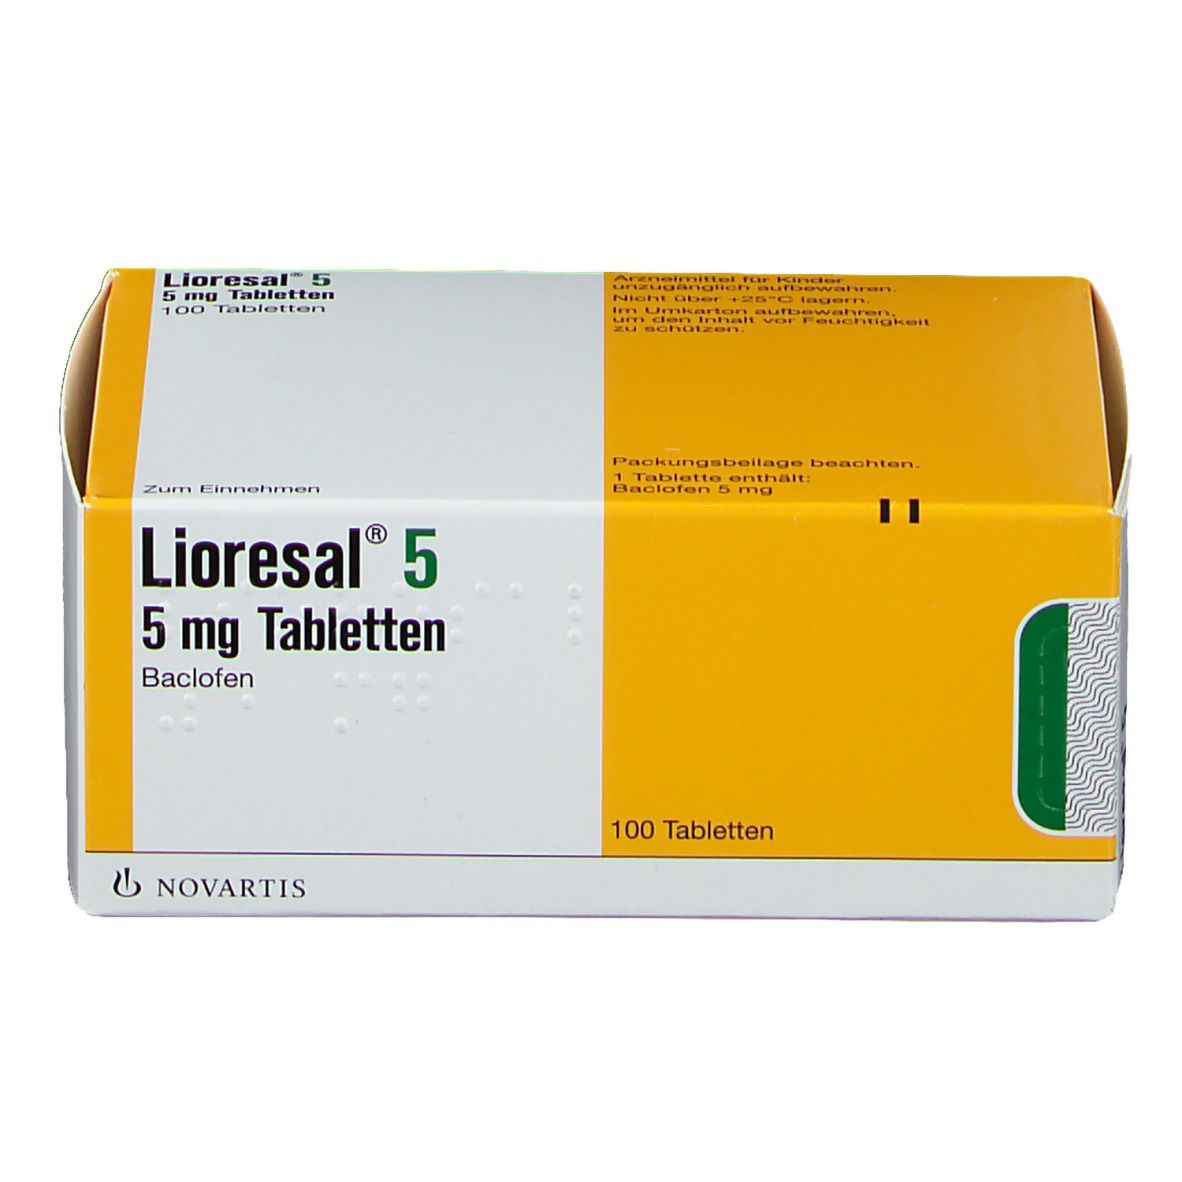 Lioresal® 5 mg